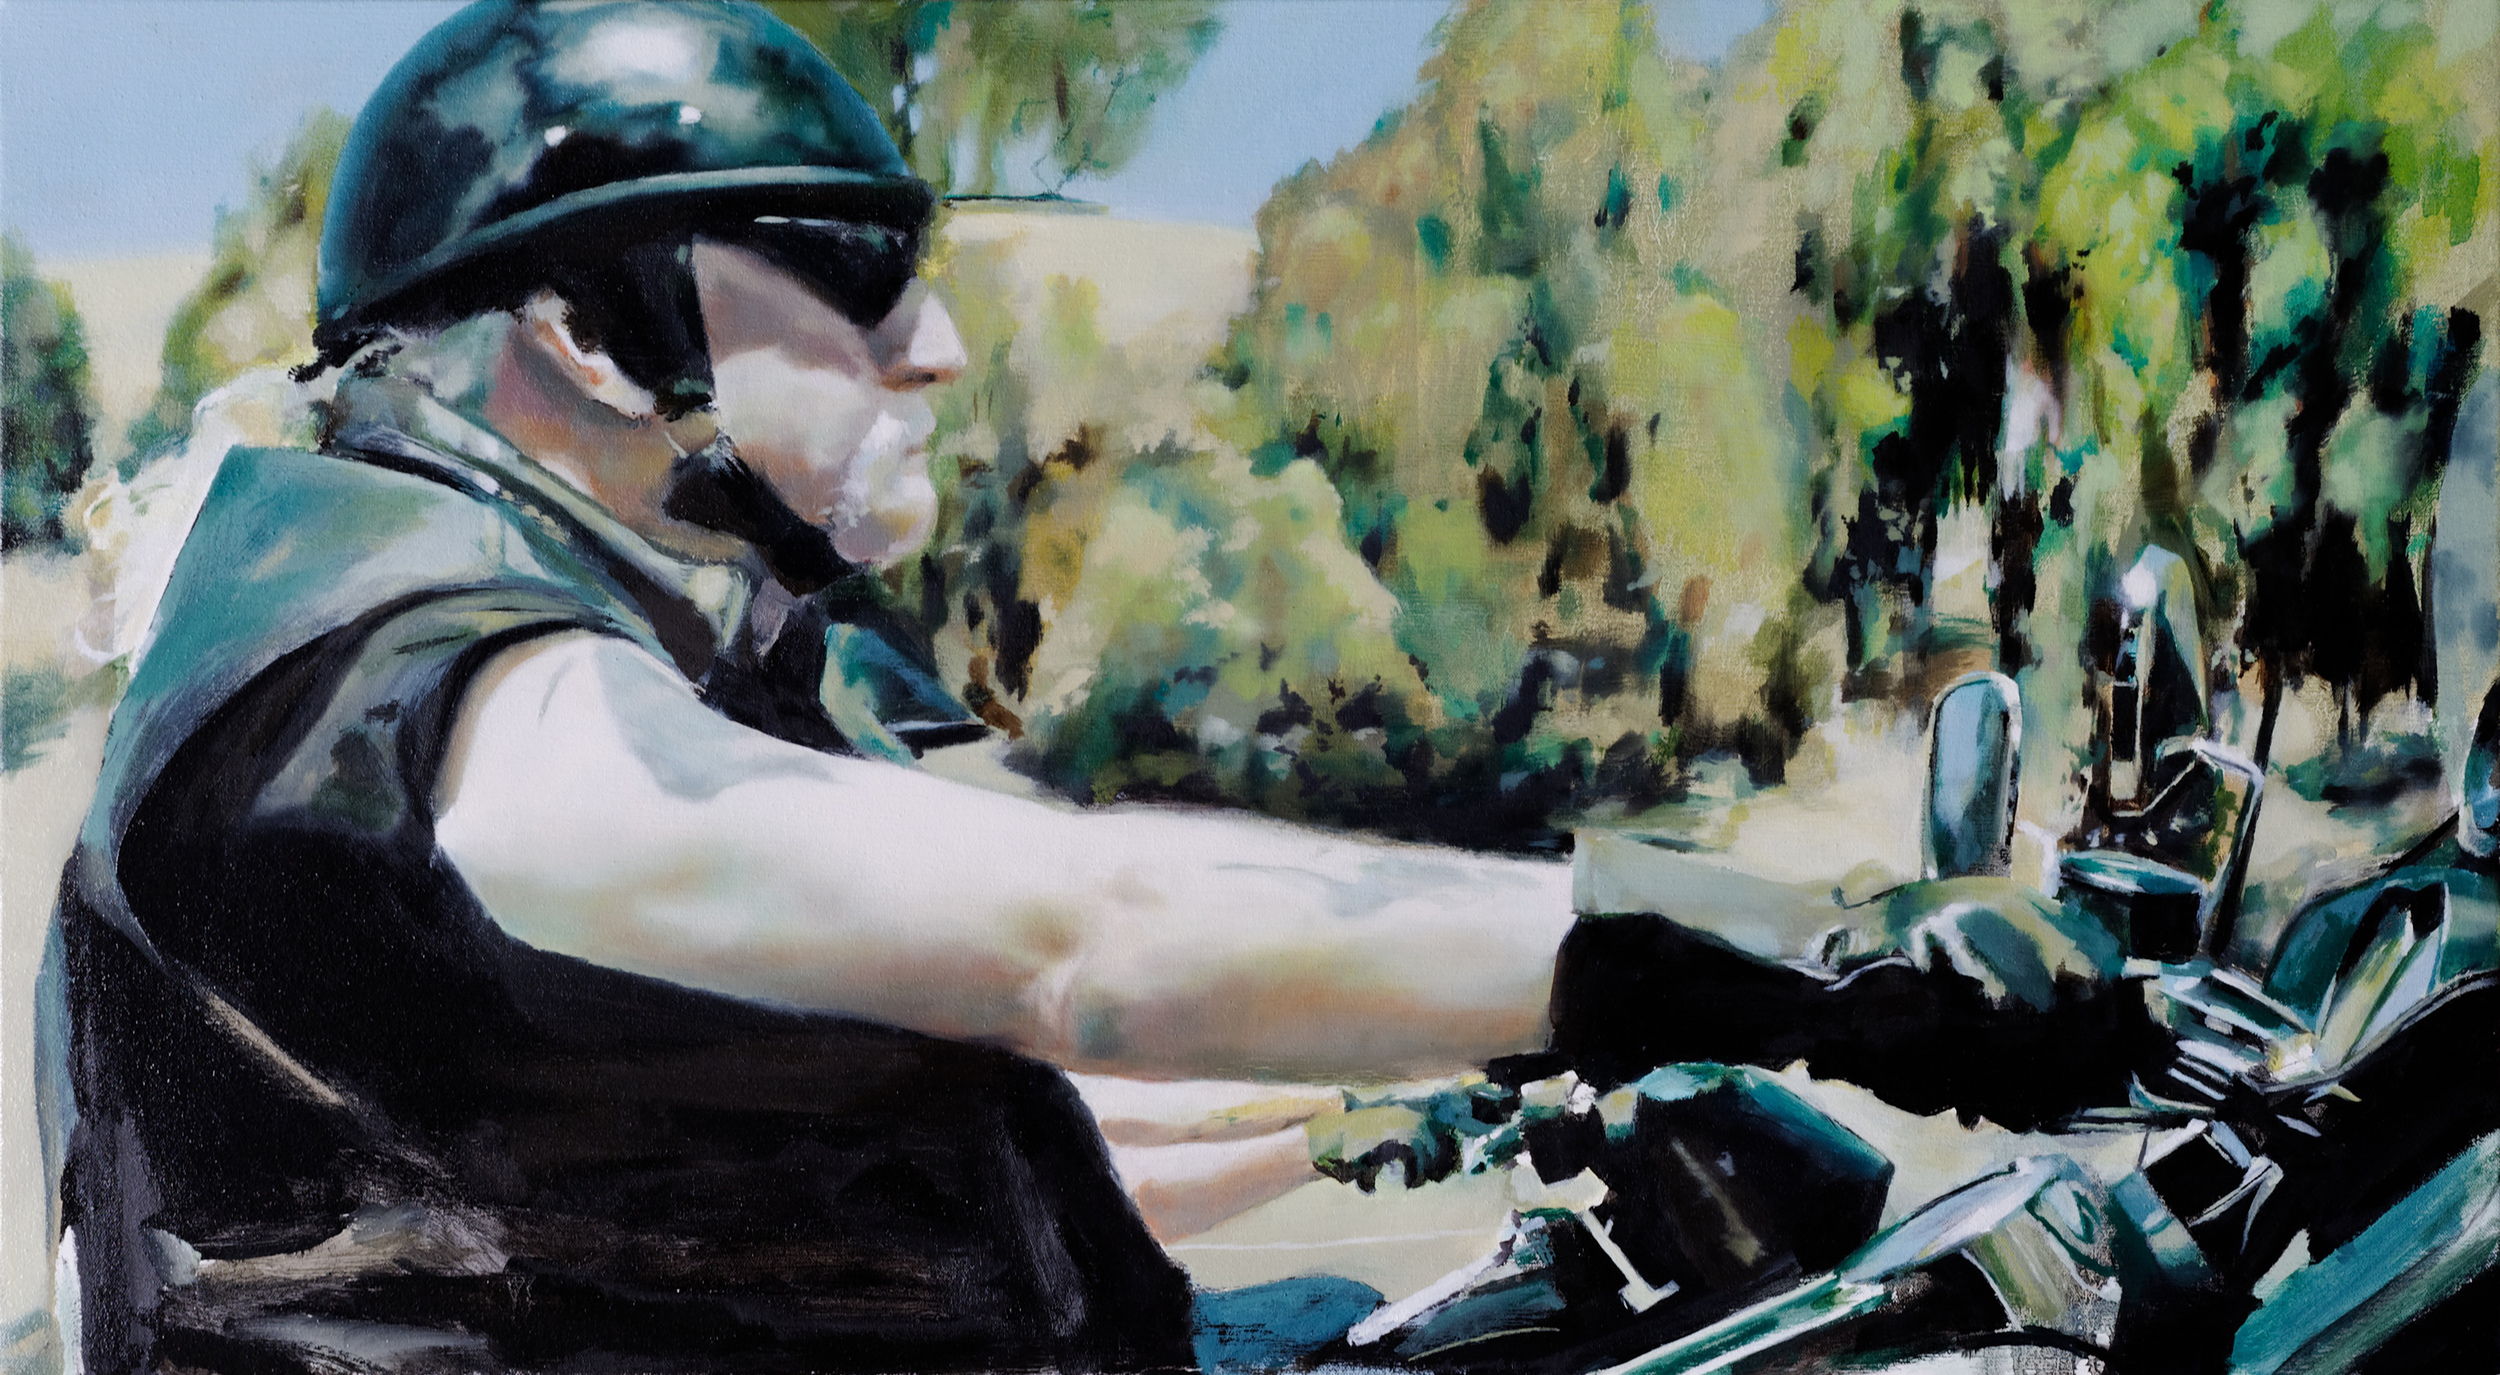   biker 2&nbsp;&nbsp; •  22" x 40"  oil on canvas  2009    